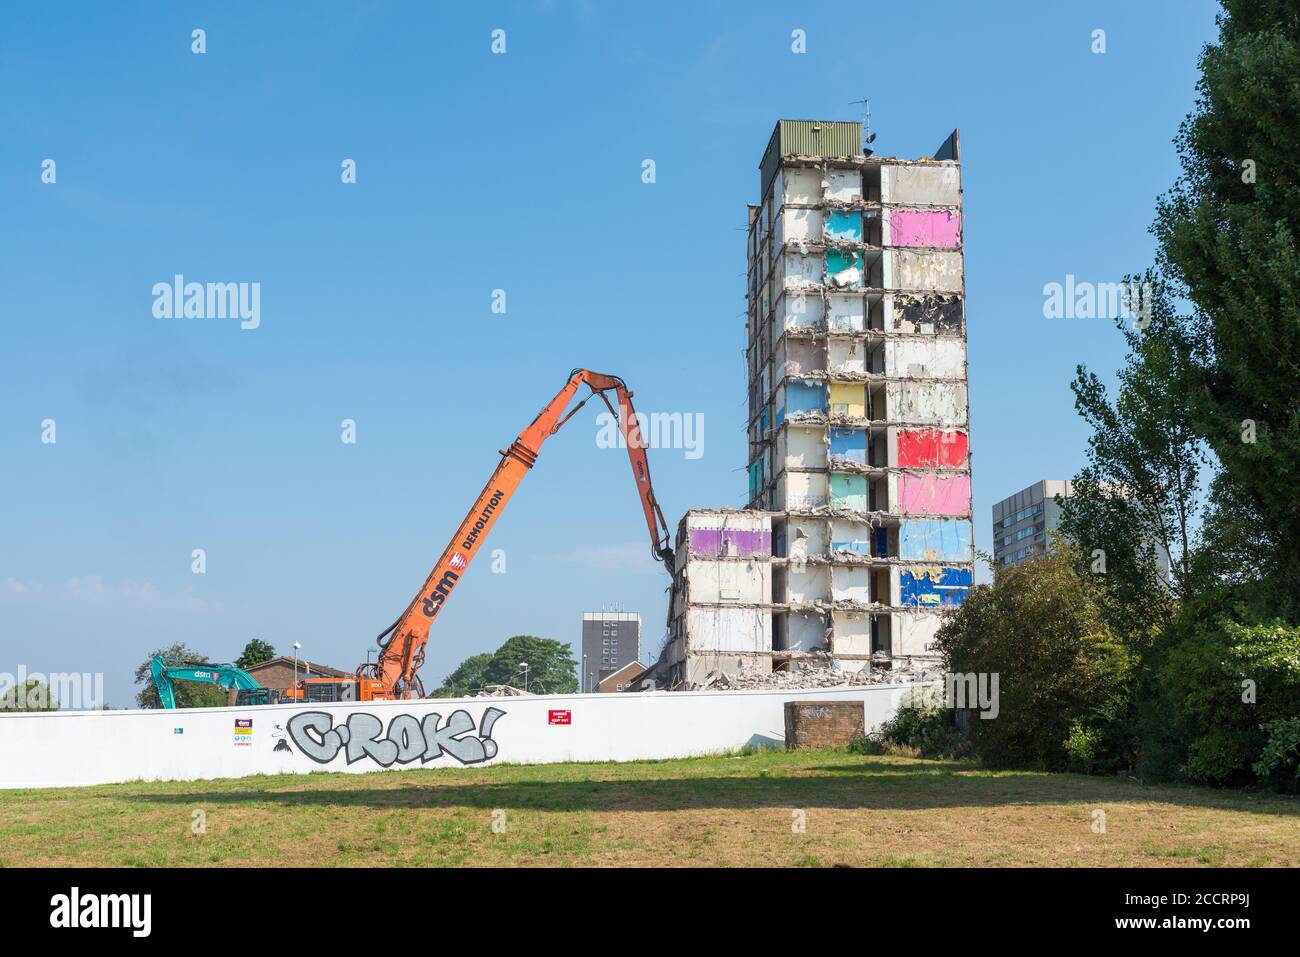 Demolition is underway of Heath House tower block in Druids Heath, Birmingham by DSM demolition company Stock Photo